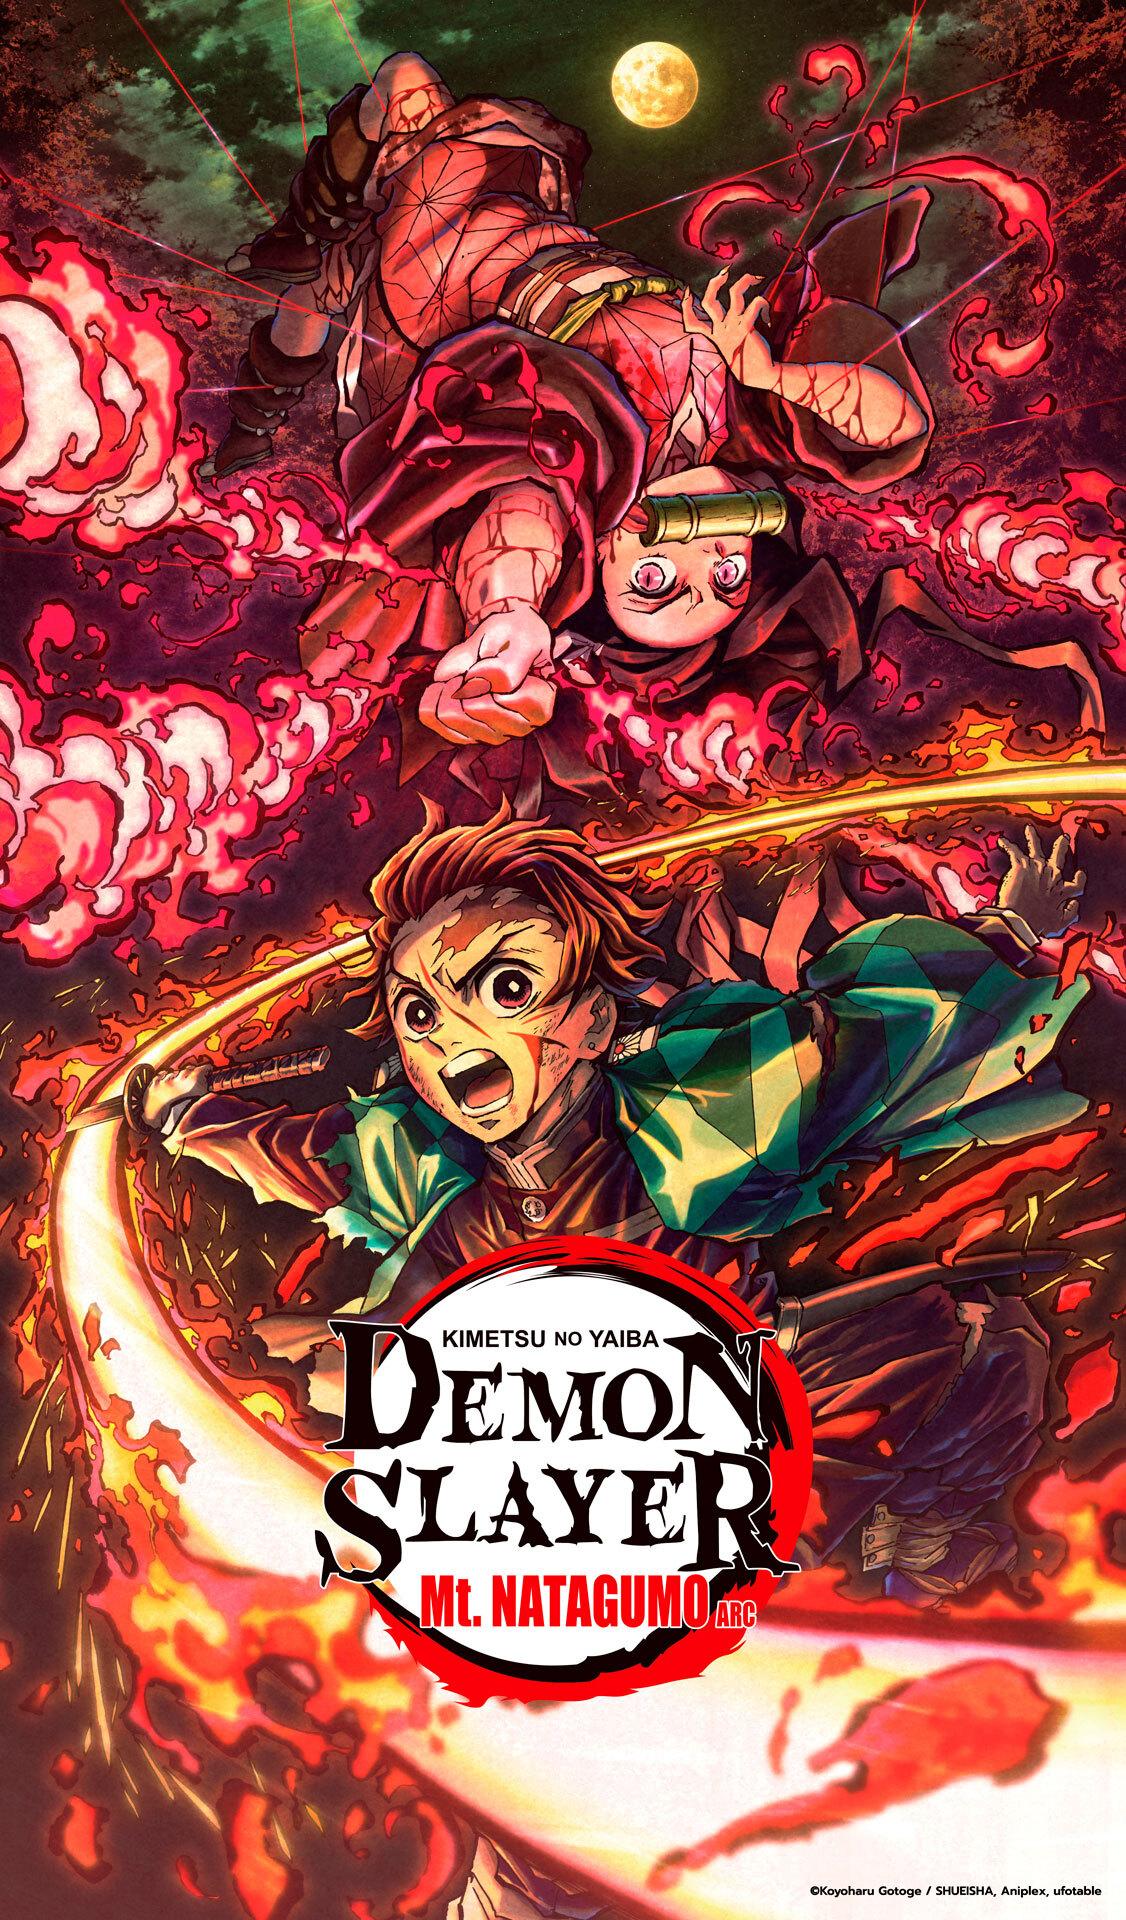 Demon Slayer – Kimetsu no Yaiba: Funimation anuncia episodios